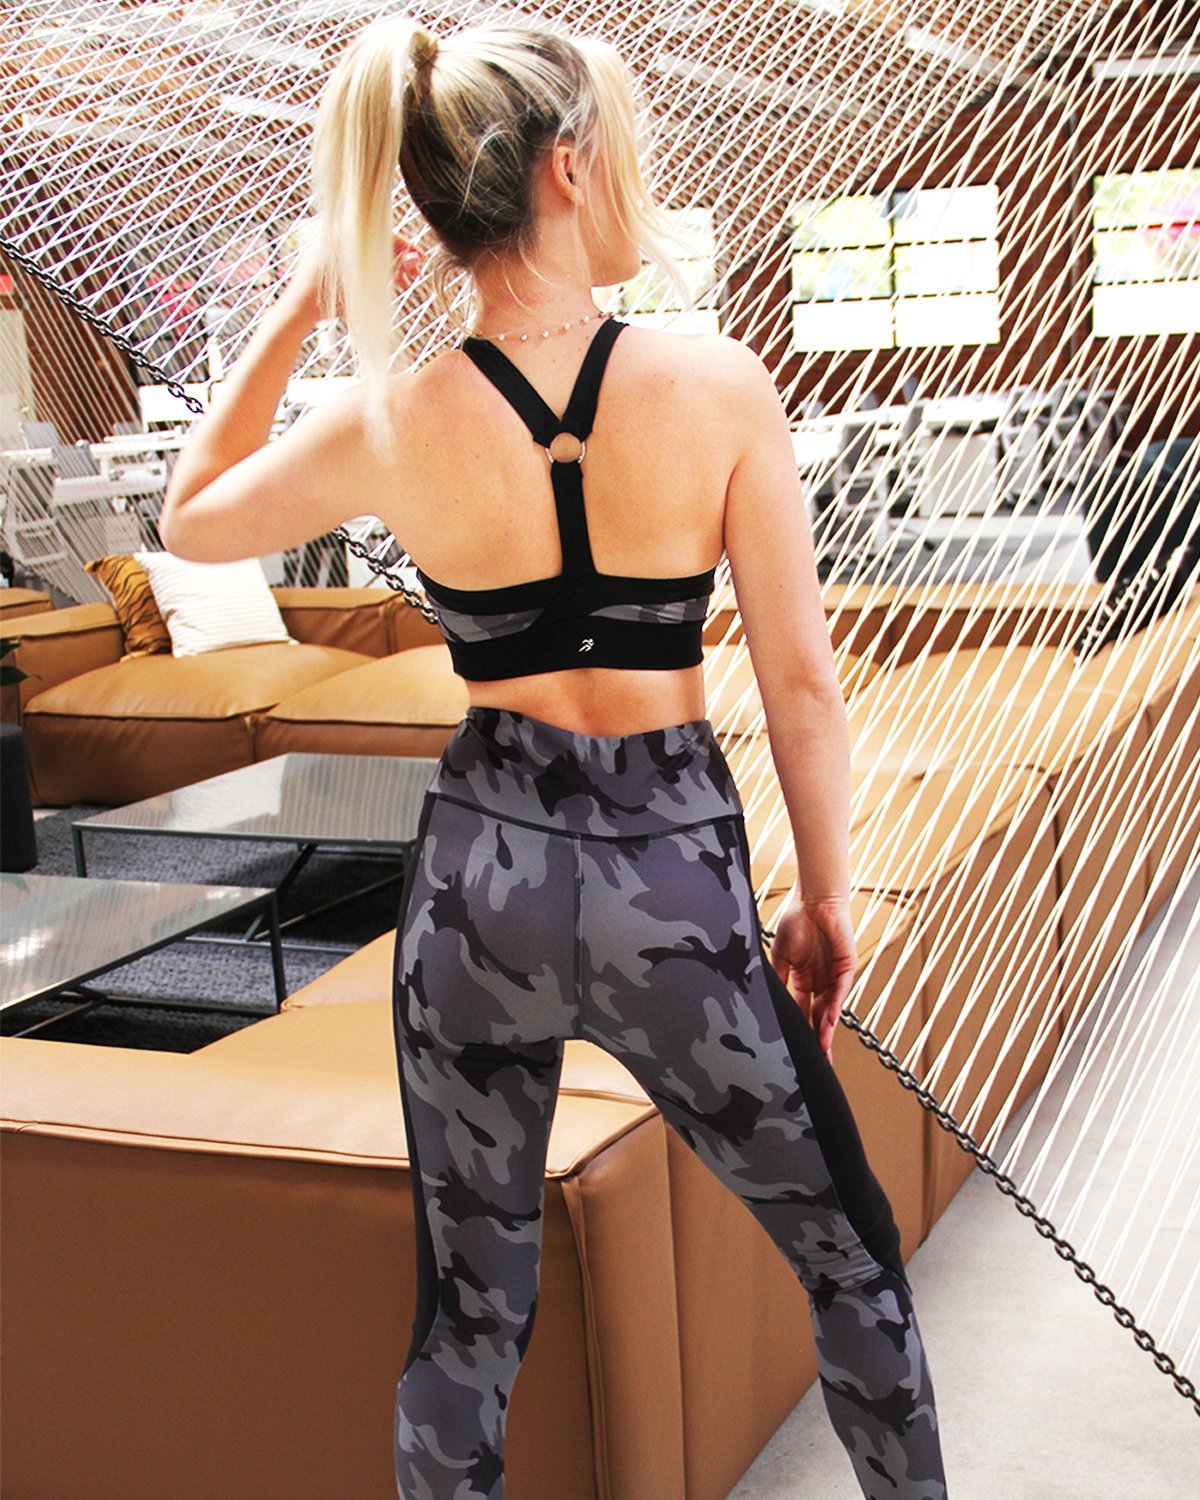 Moisture-Resistant Fashion Leggings & Sports Bra Set - Women's Activewear Set from fluentclothing.com